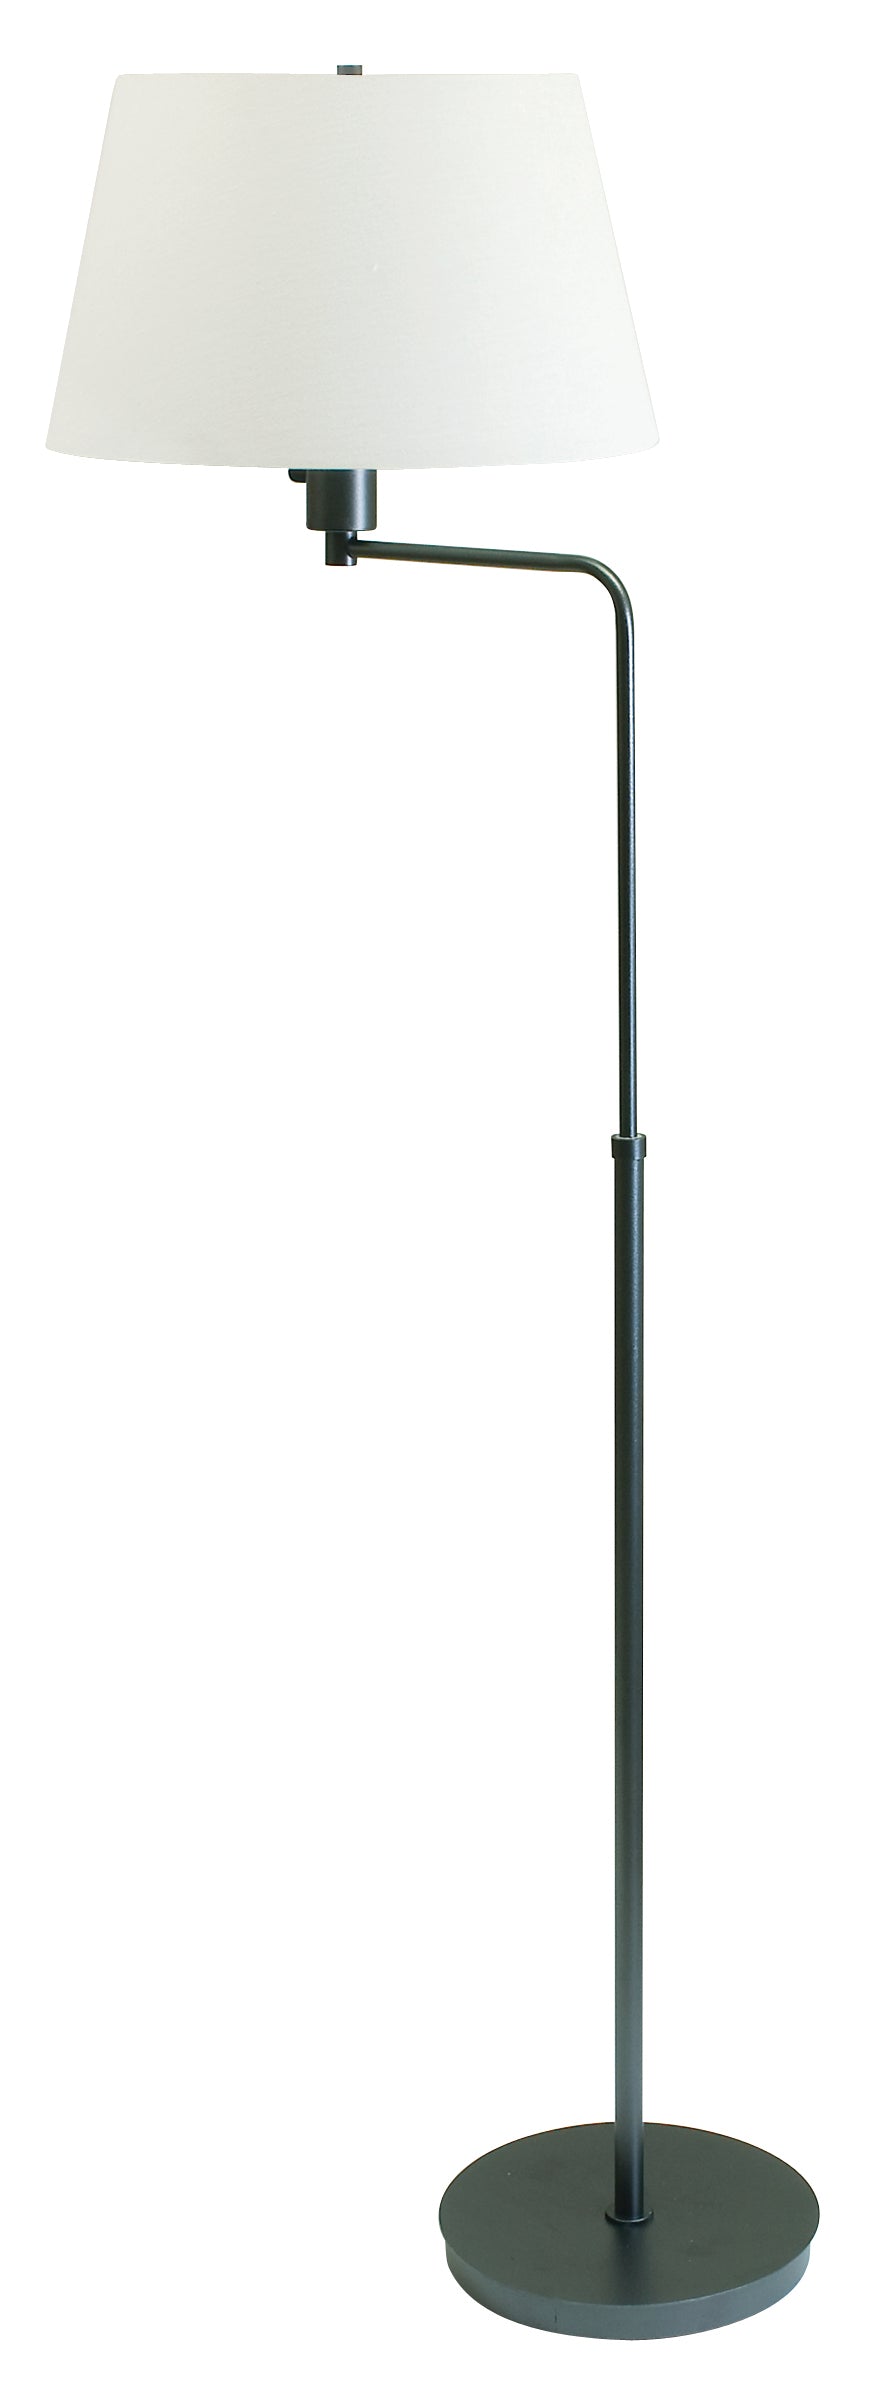 House of Troy Generation Adjustable Floor Lamp Granite G200-GT